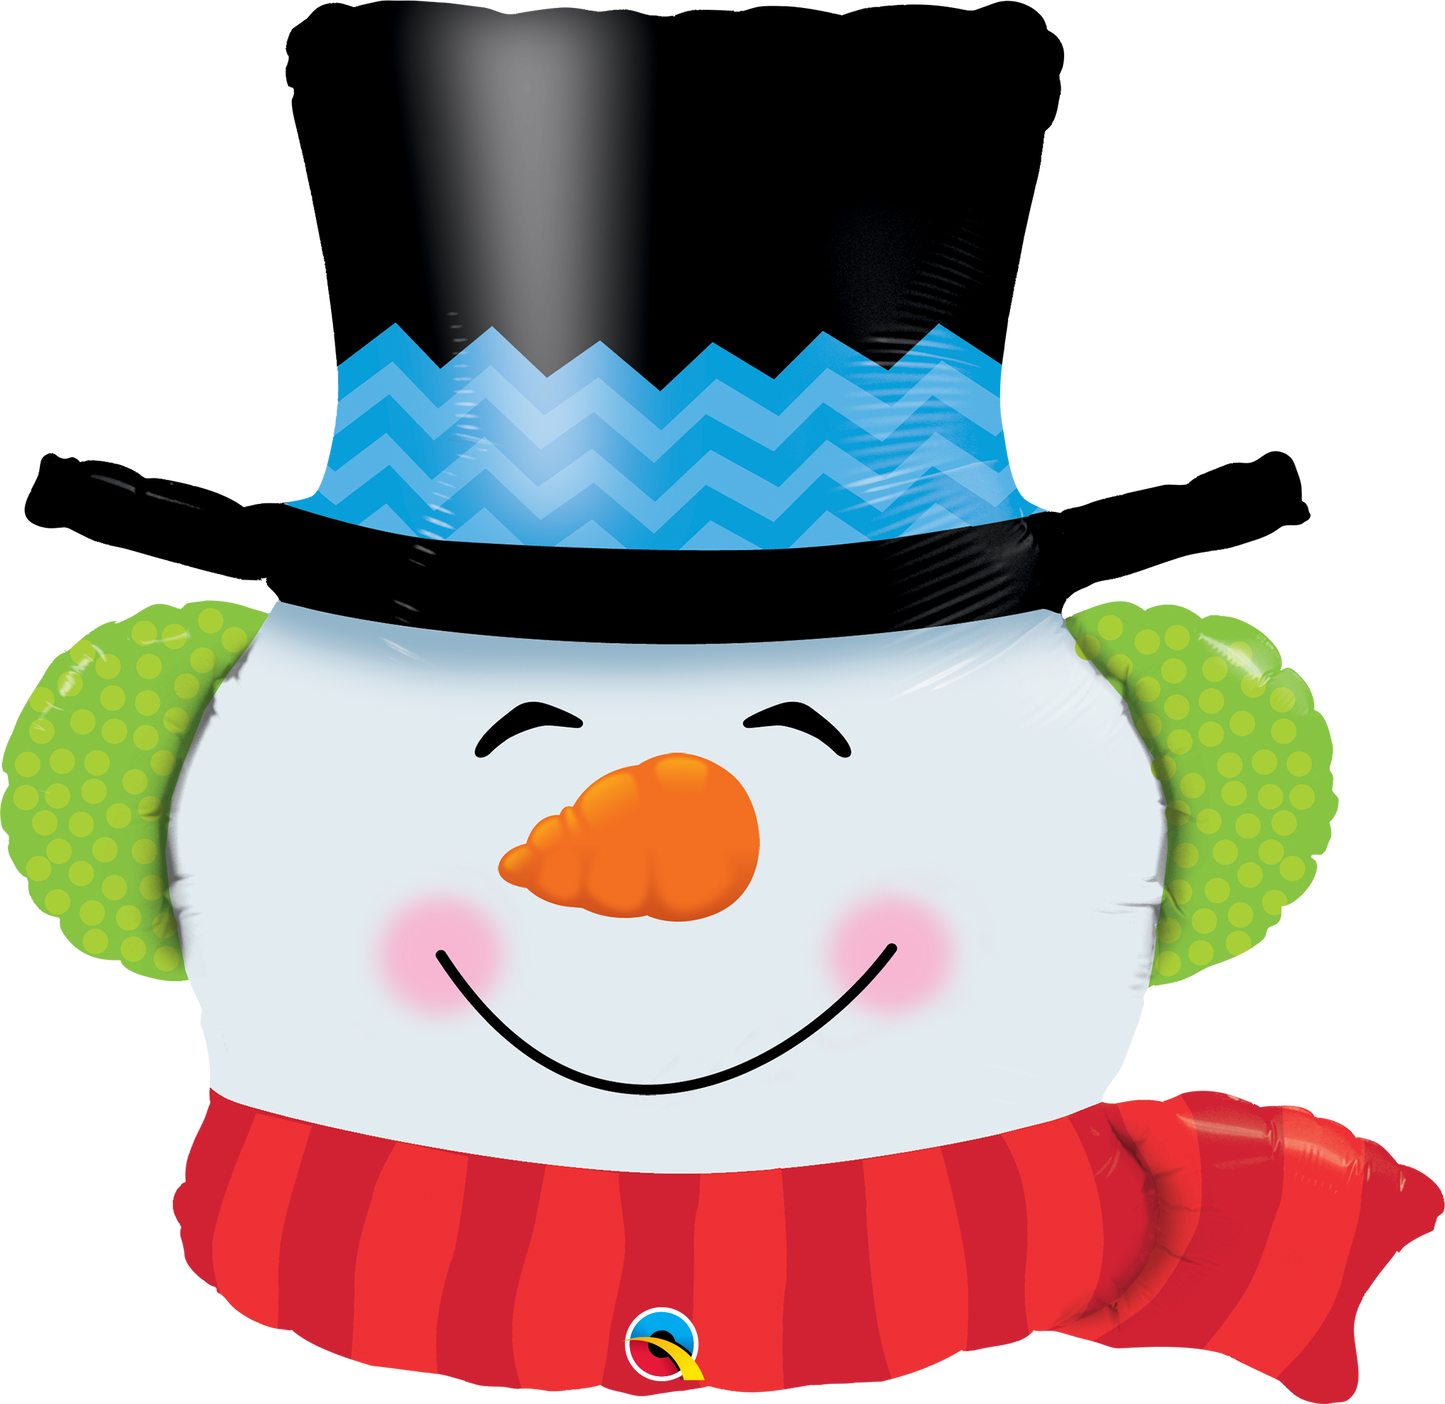 Snowman - Holiday Column